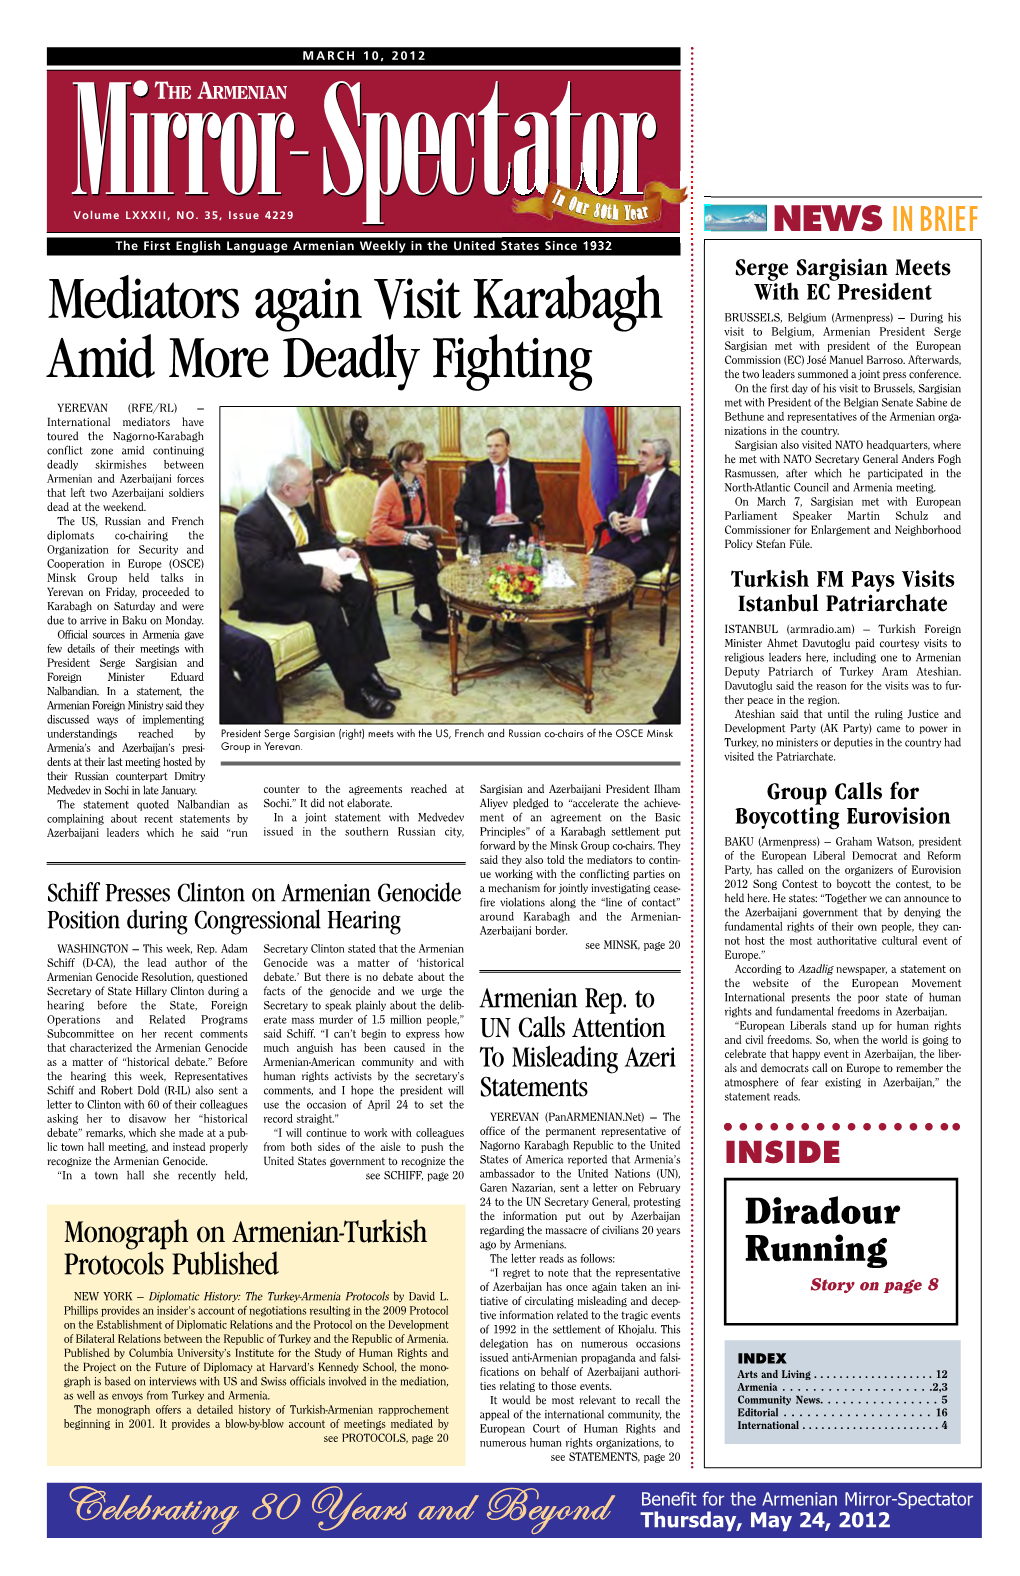 Mediators Again Visit Karabagh Amid